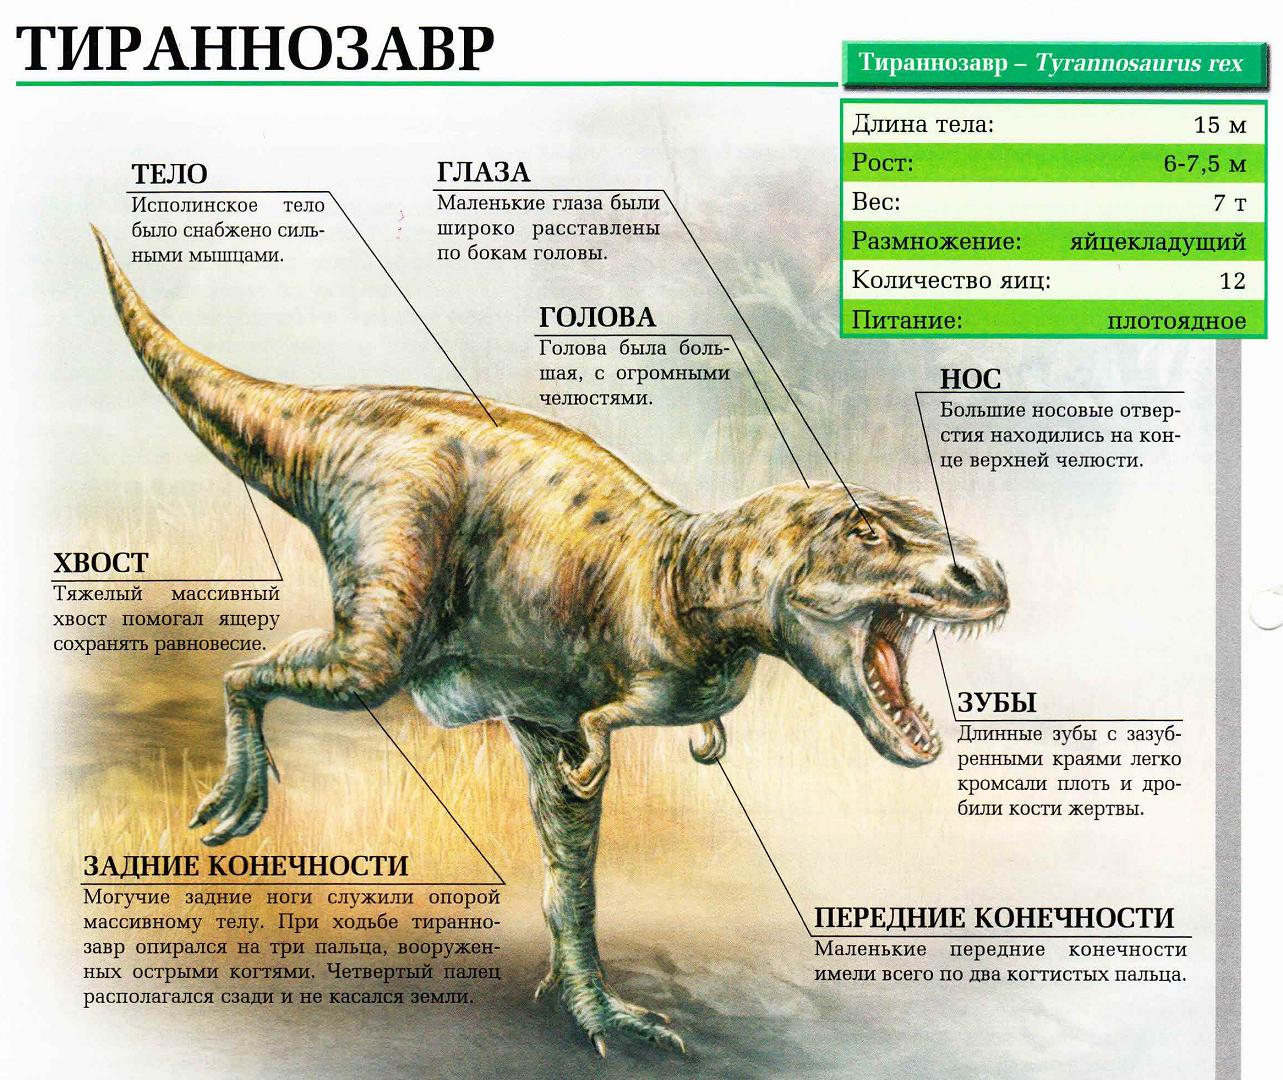 Описание тираннозавра.